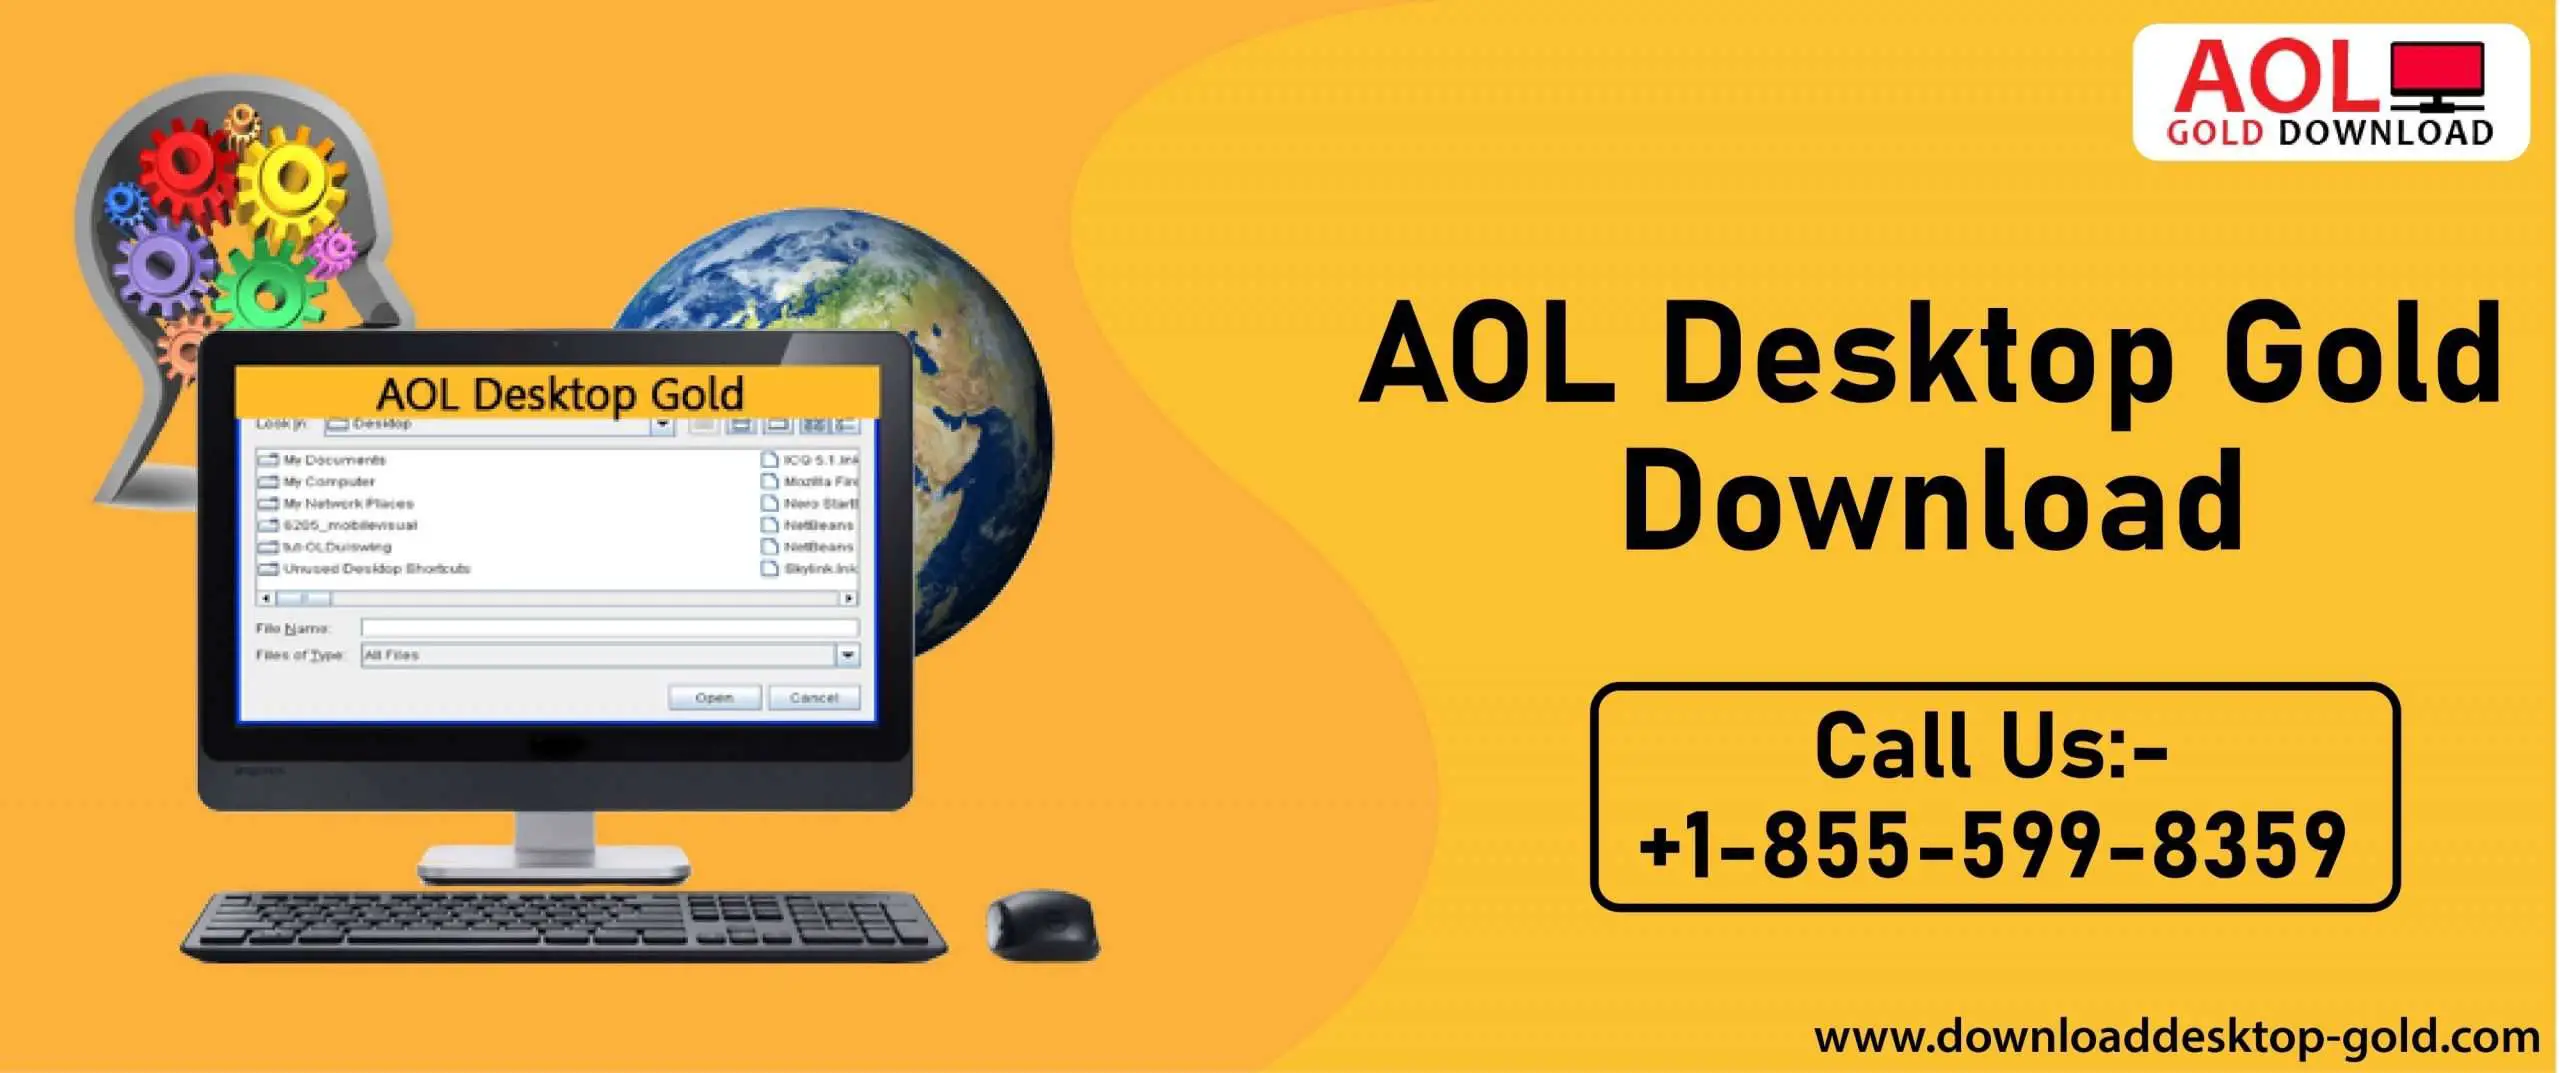 Reason behind immense popularity of AOL Desktop Gold ...